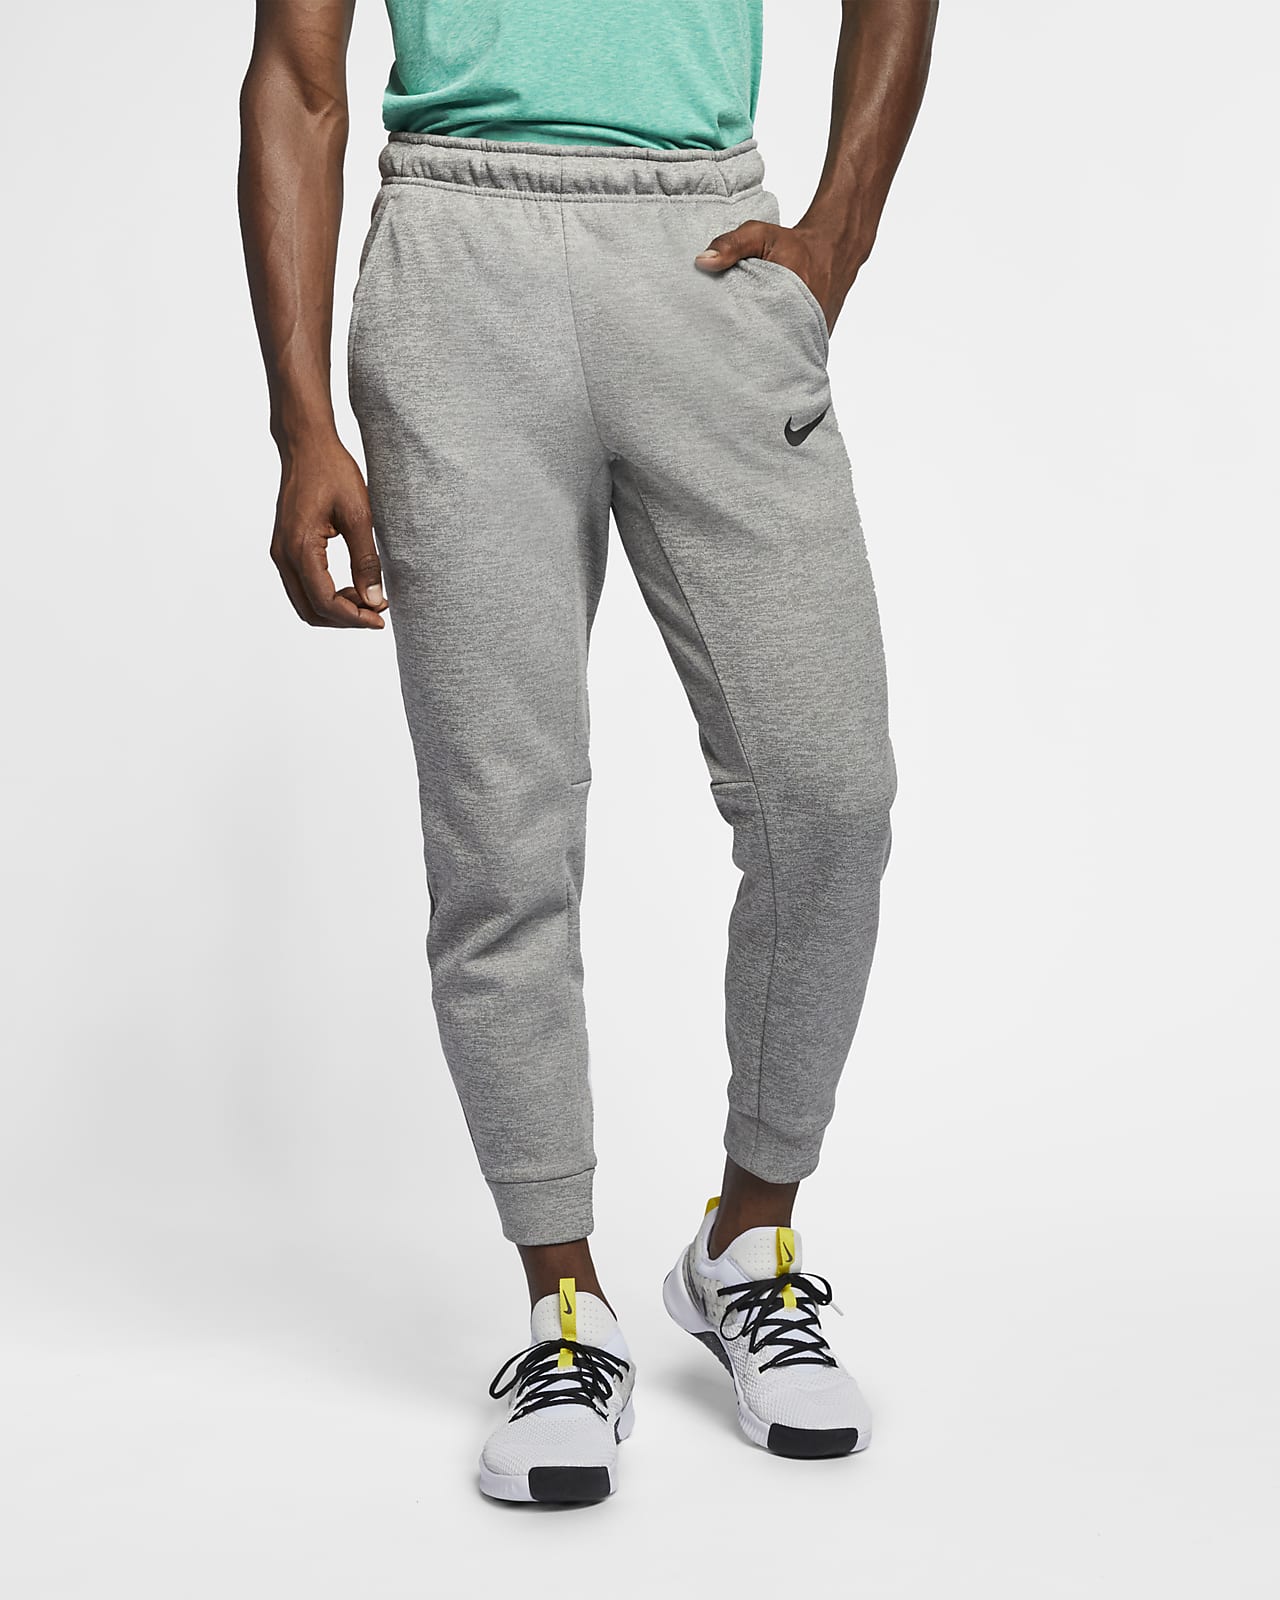 Nike公式 ナイキ サーマ メンズ テーパード トレーニングパンツ オンラインストア 通販サイト